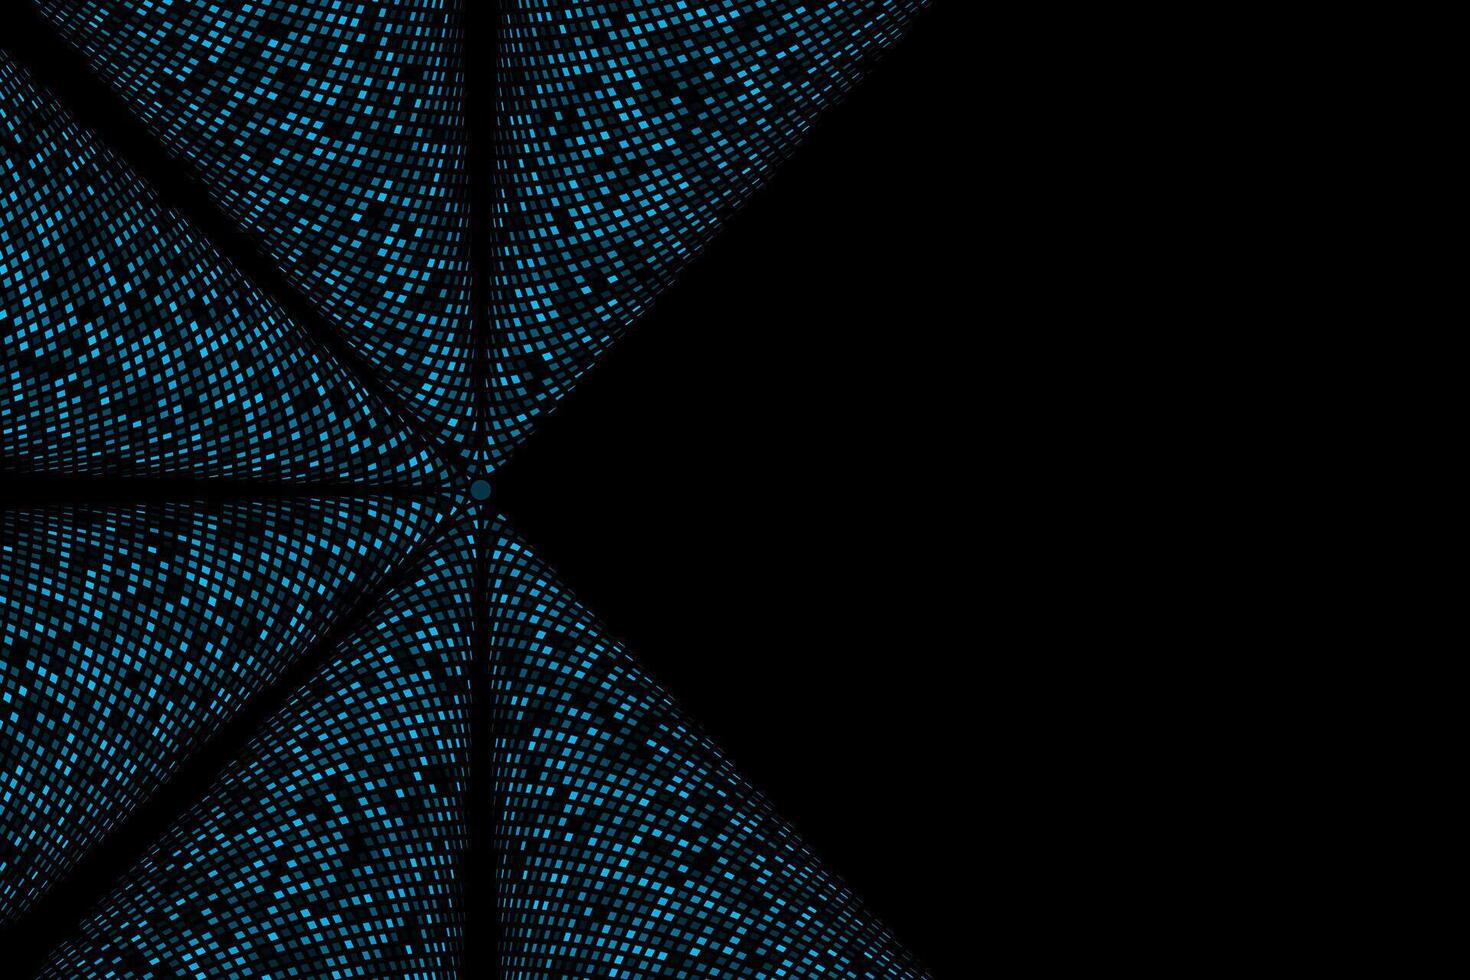 azul meio-tom abstrato Estrela papel de parede fundo vetor